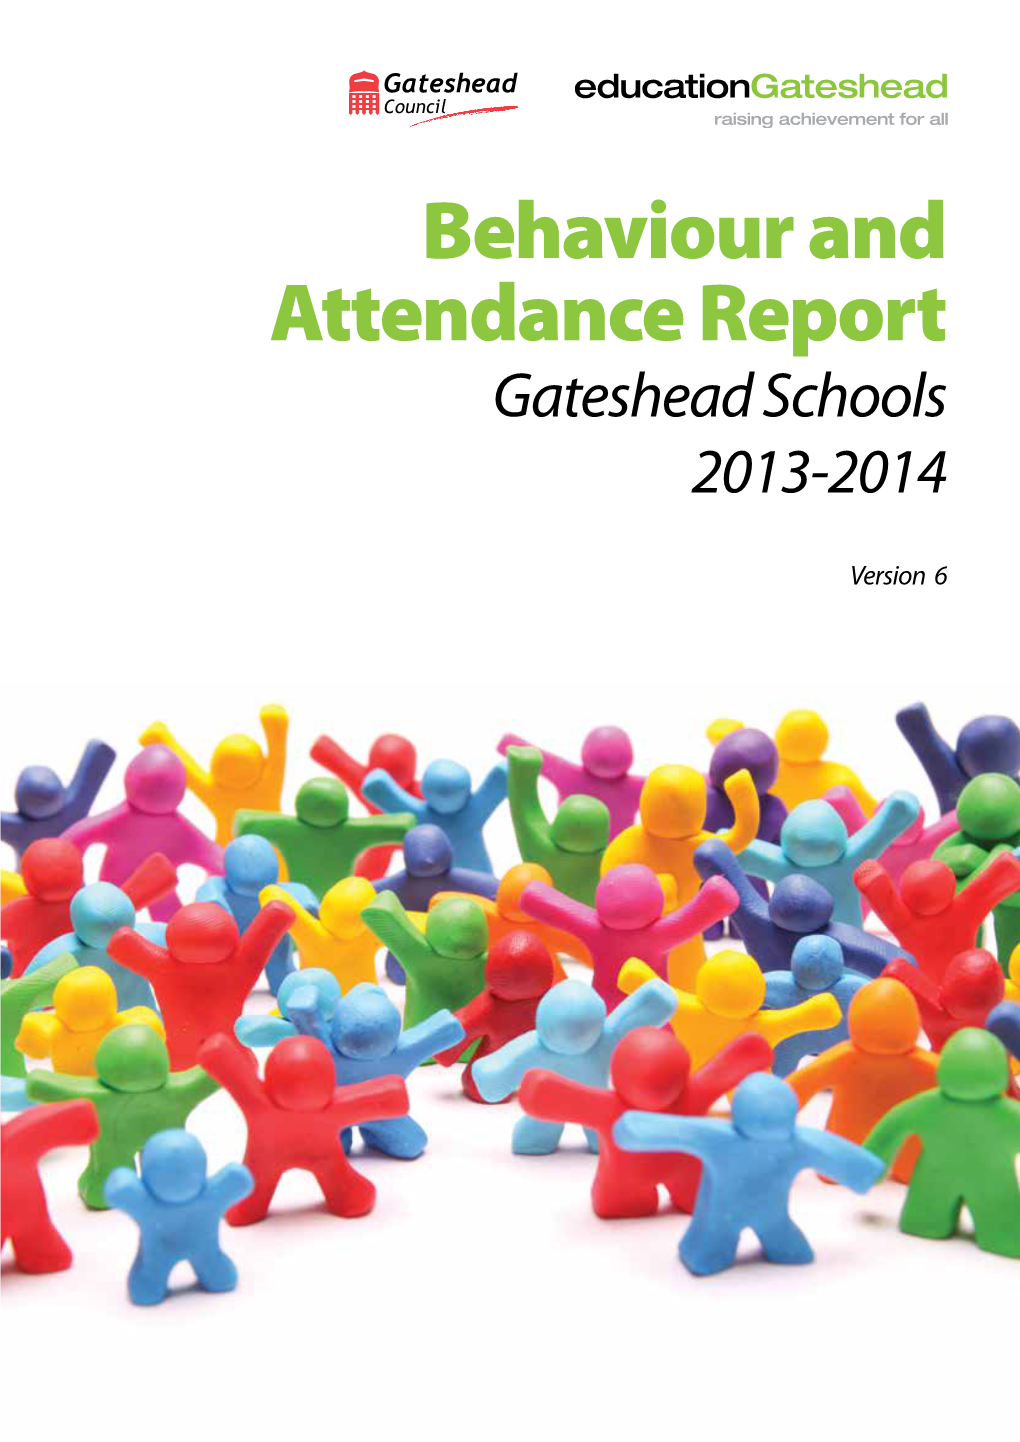 Behaviour and Attendance Report for Gateshead Schools 2013-2014